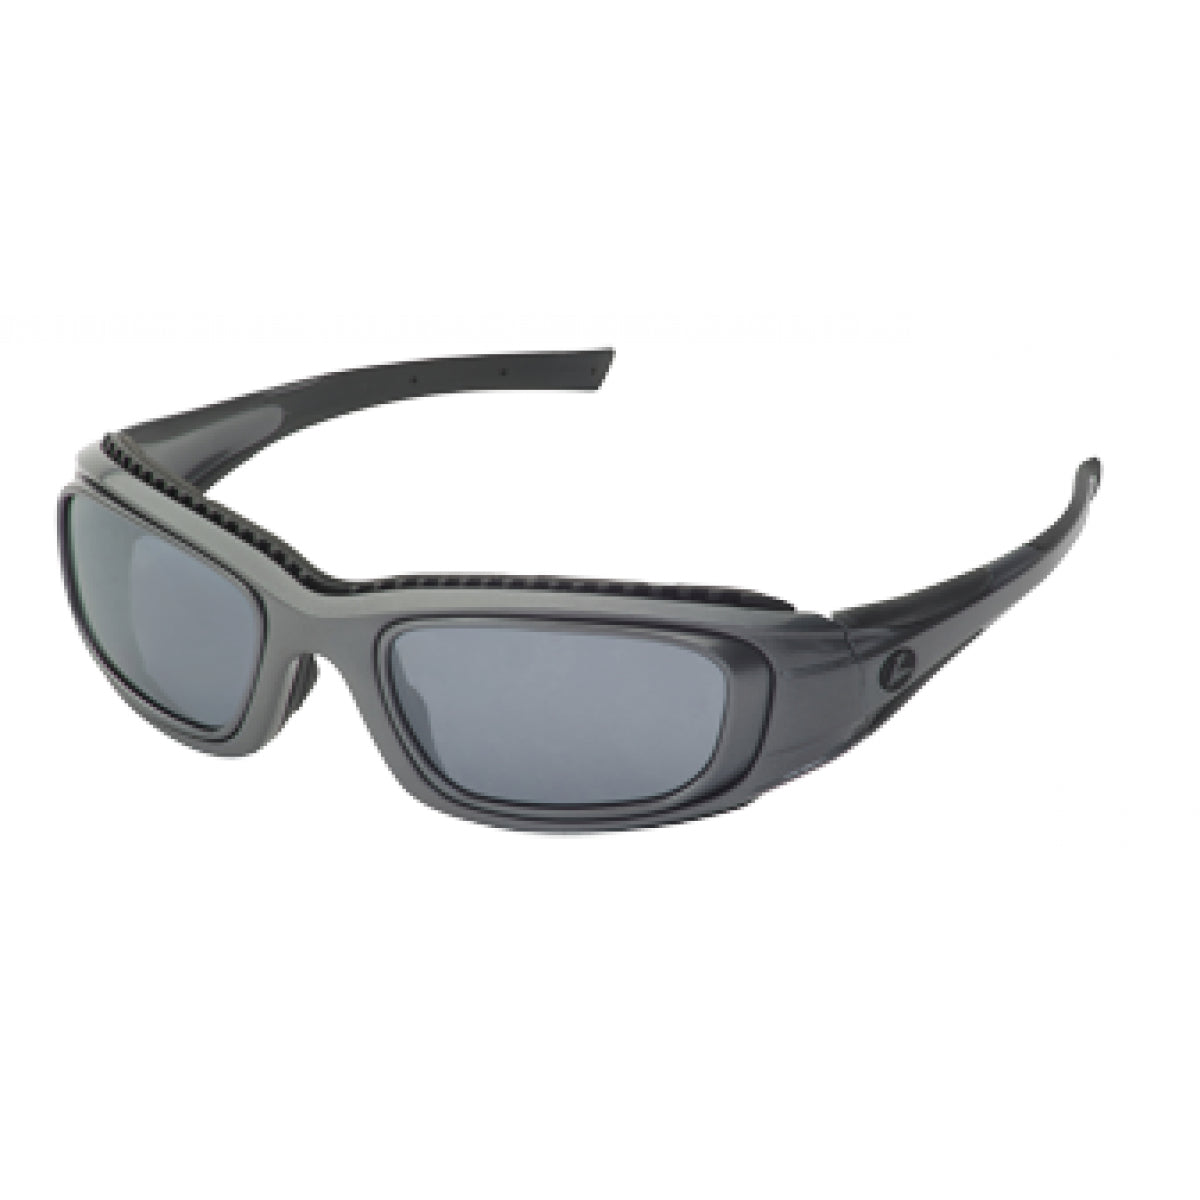 Hilco Leader RX Sunglasses Cruiser